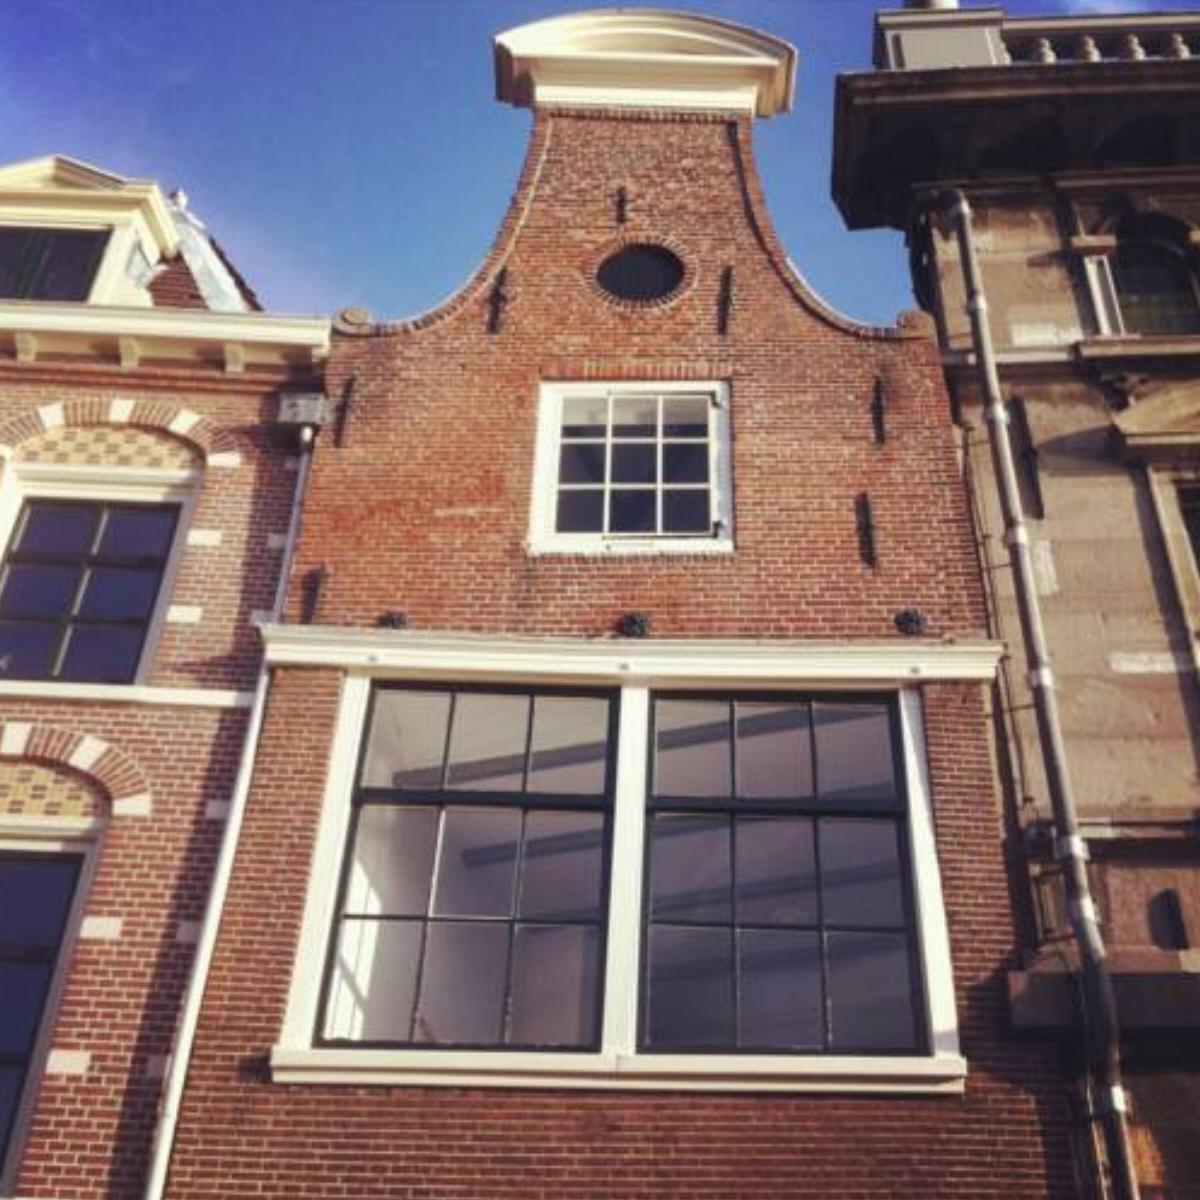 Teylers Apartment anno 1608 Hotel Haarlem Netherlands